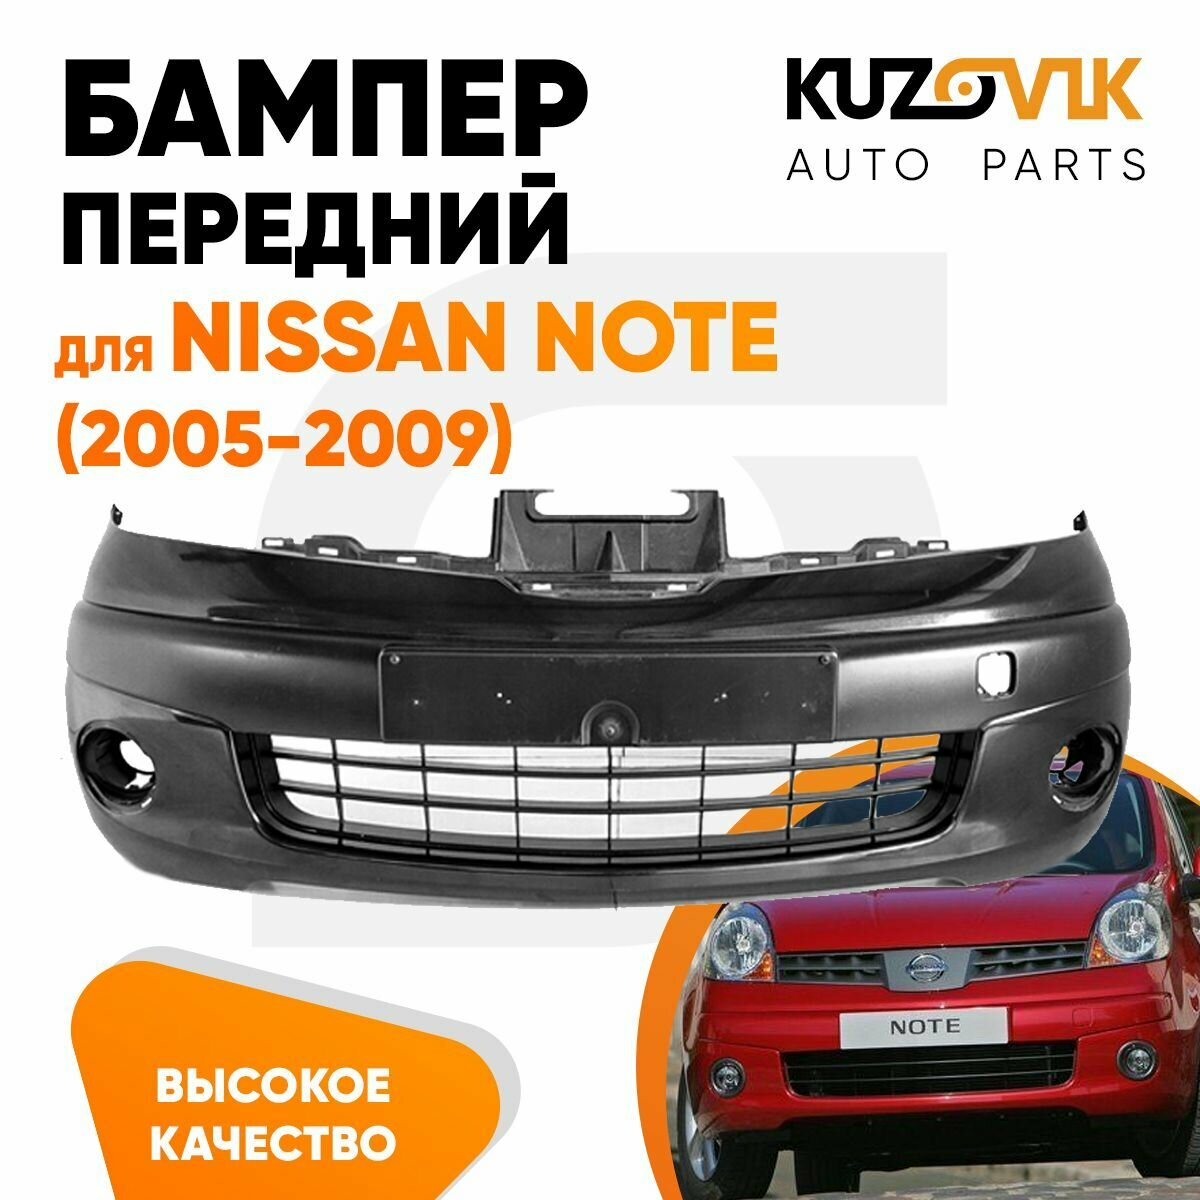 Бампер передний для Ниссан Ноте Nissan Note (2005-2009) под цельную решетку